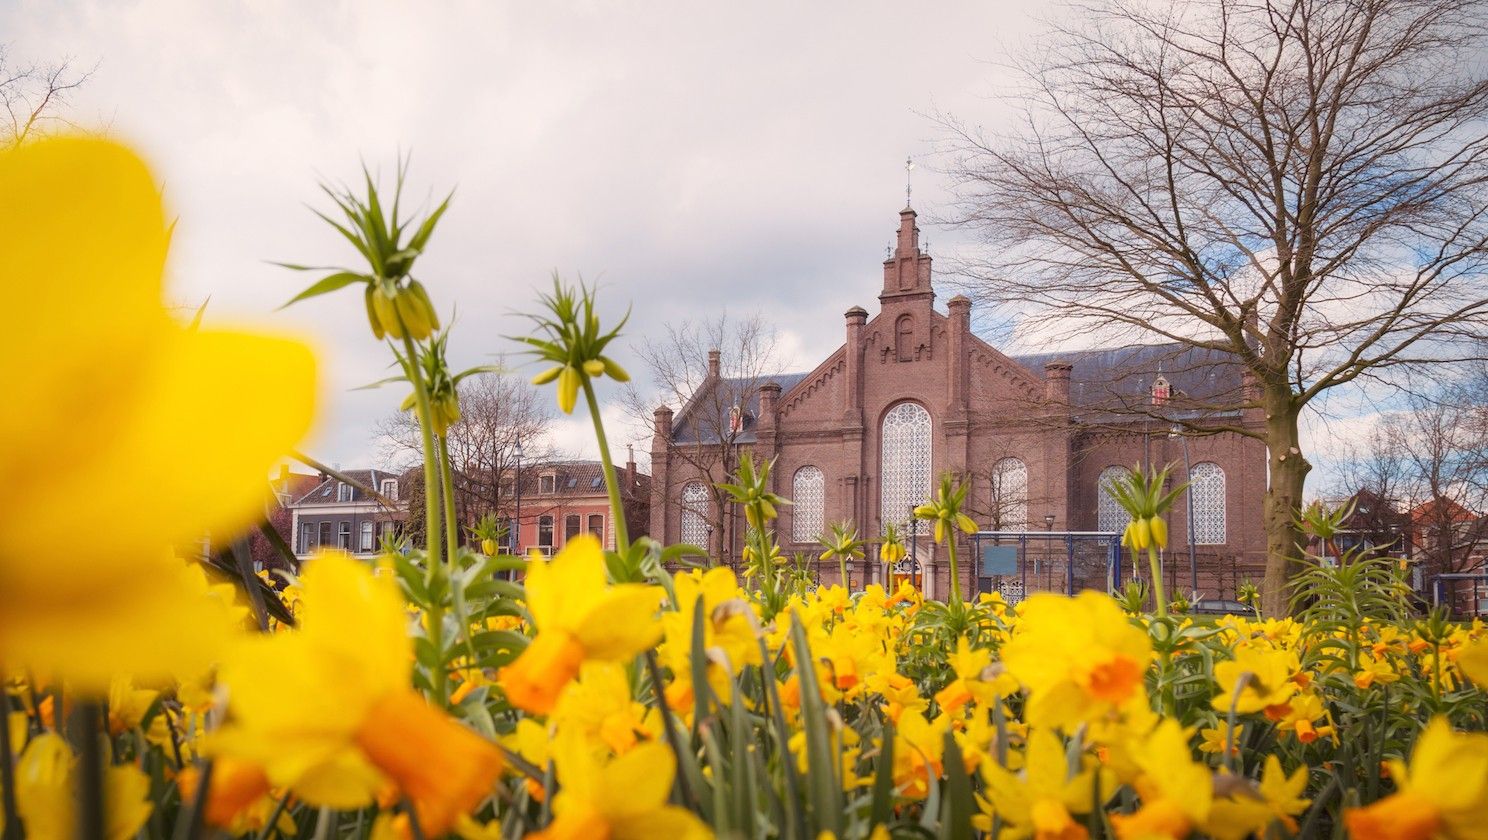 Plantagekerk Zwolle Centrum-lente-bloemen-narcissen-Patrick Ooms Photography-Natuur-1